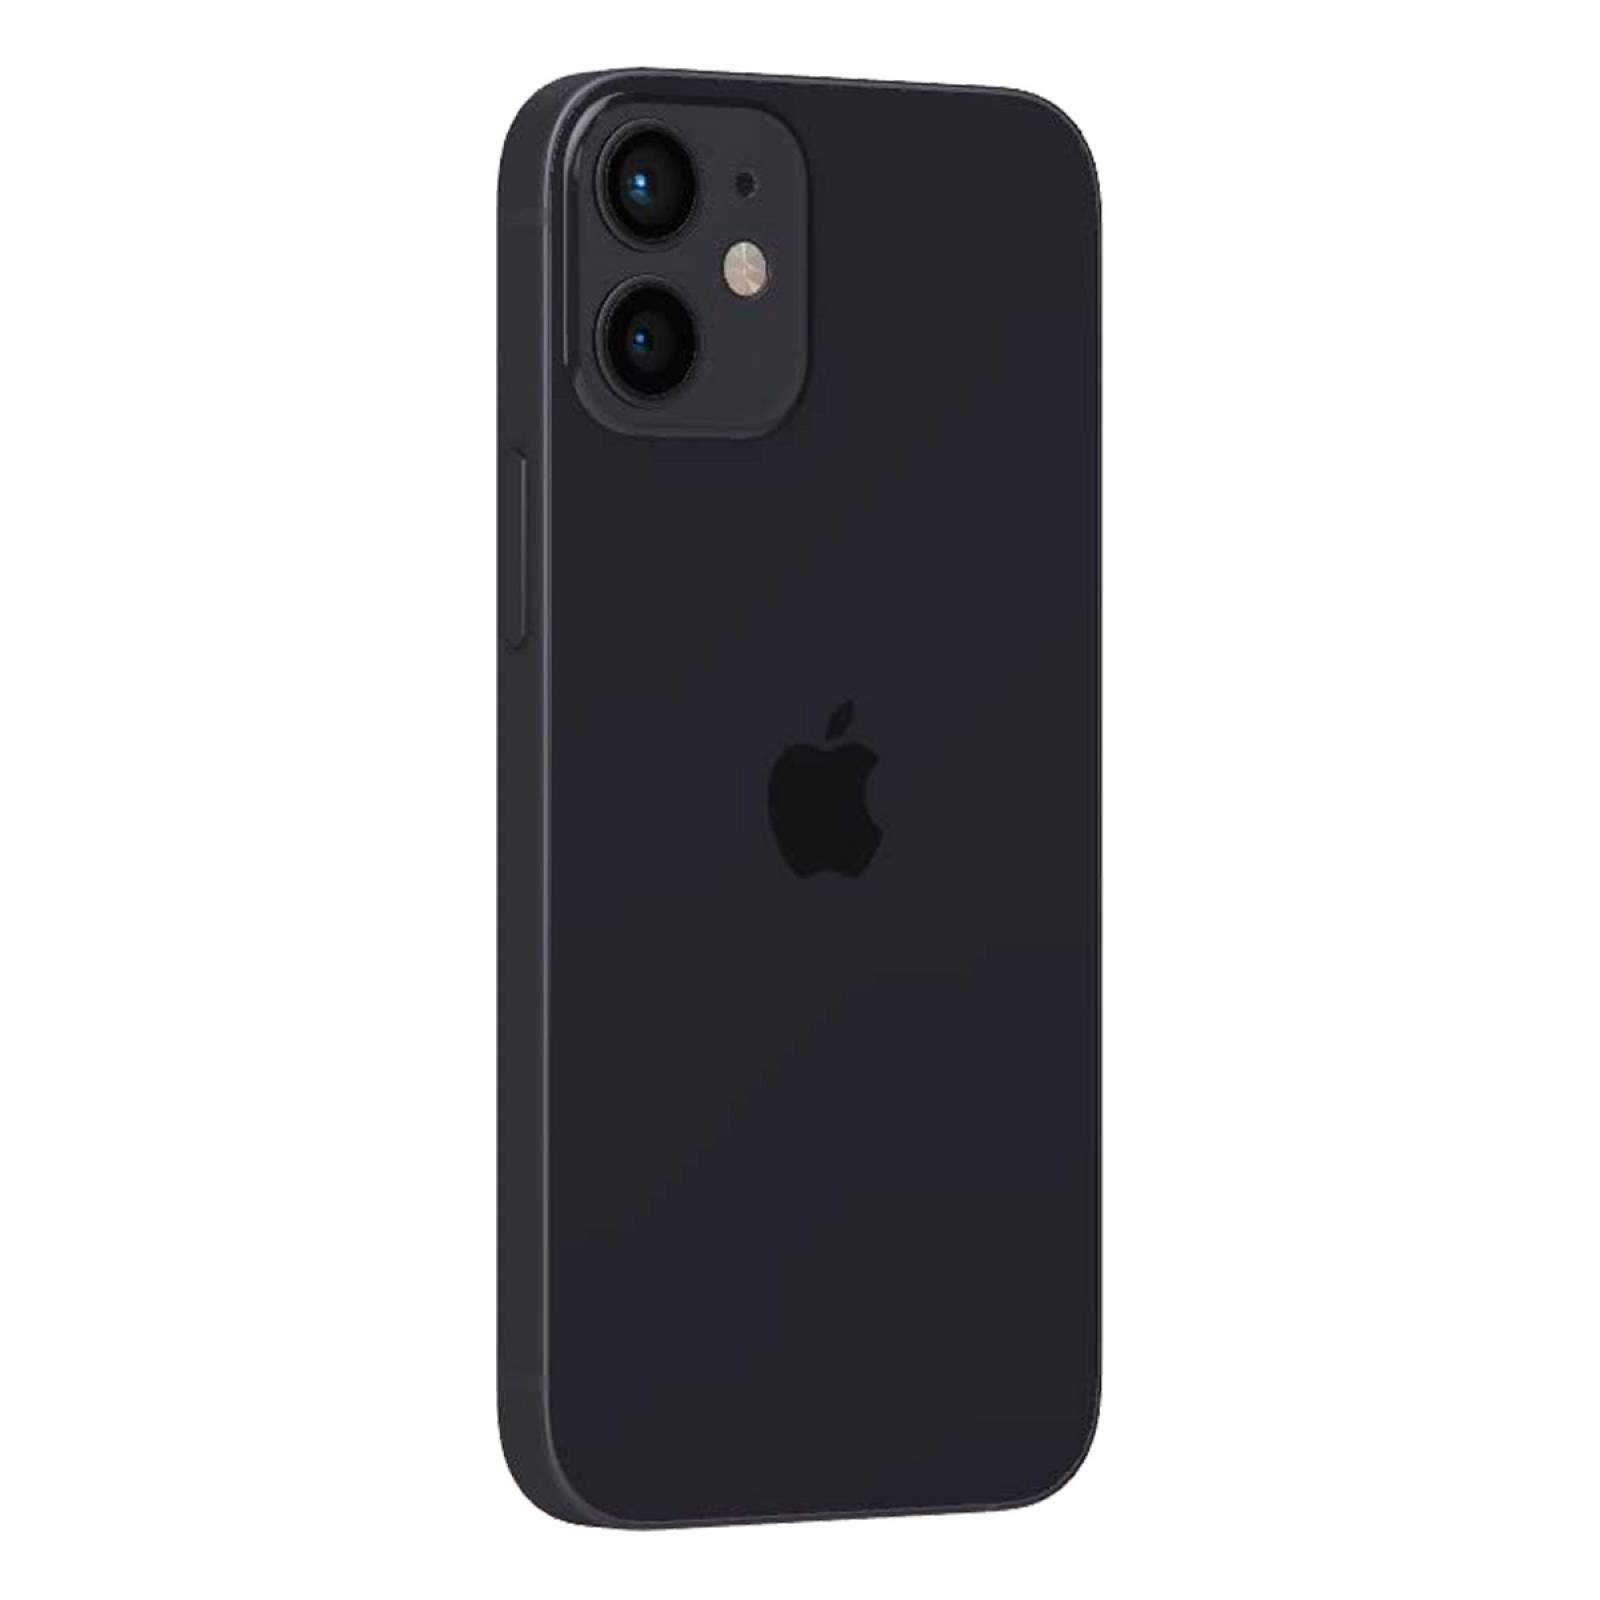 Combo Apple iPhone 12 Mini 128GB Negro Reacondicionado + Alexa